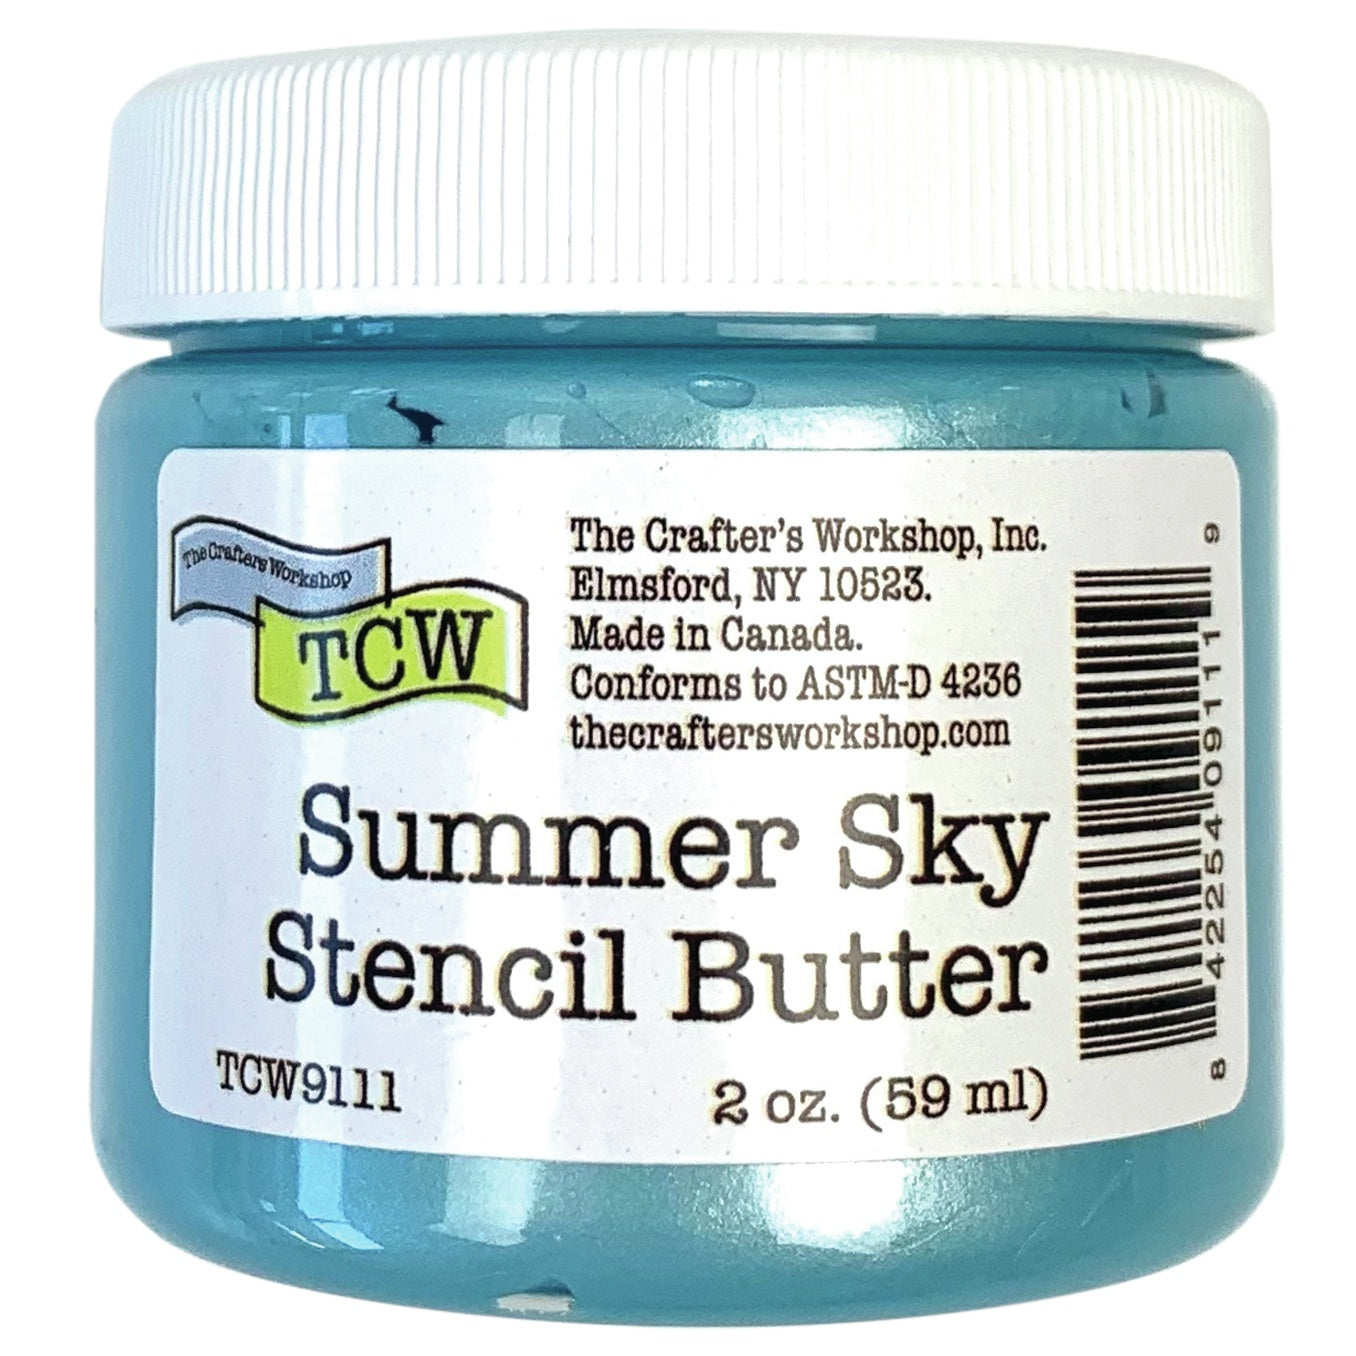 The Crafter's Workshop Summer Sky Stencil Butter